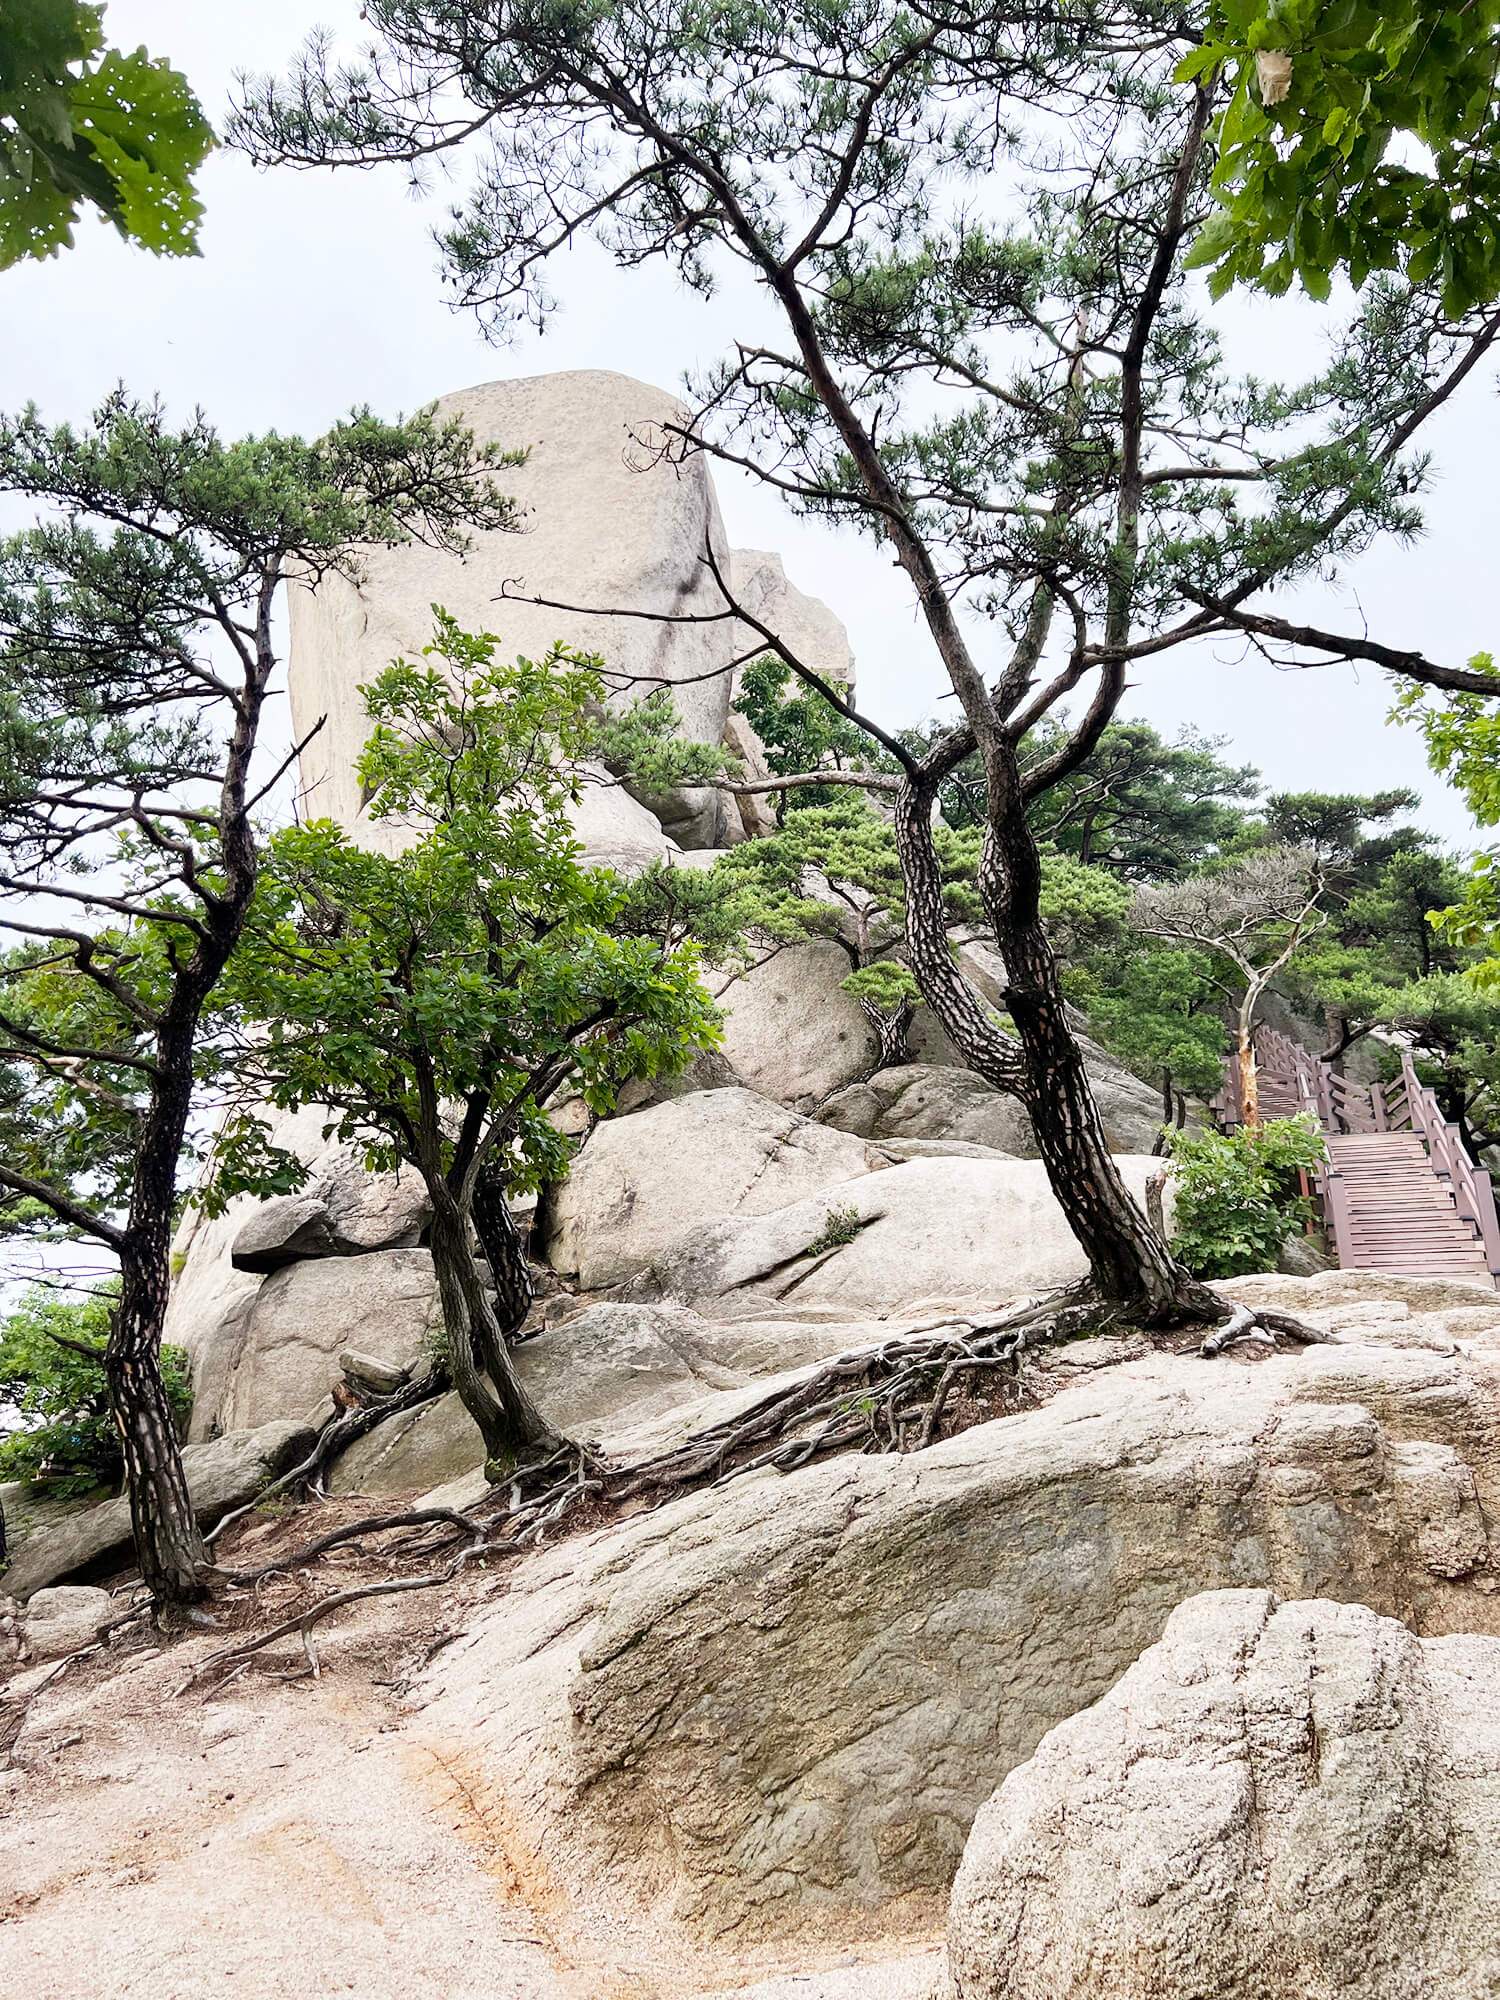 Seoul: Suraksan - A hike to the top